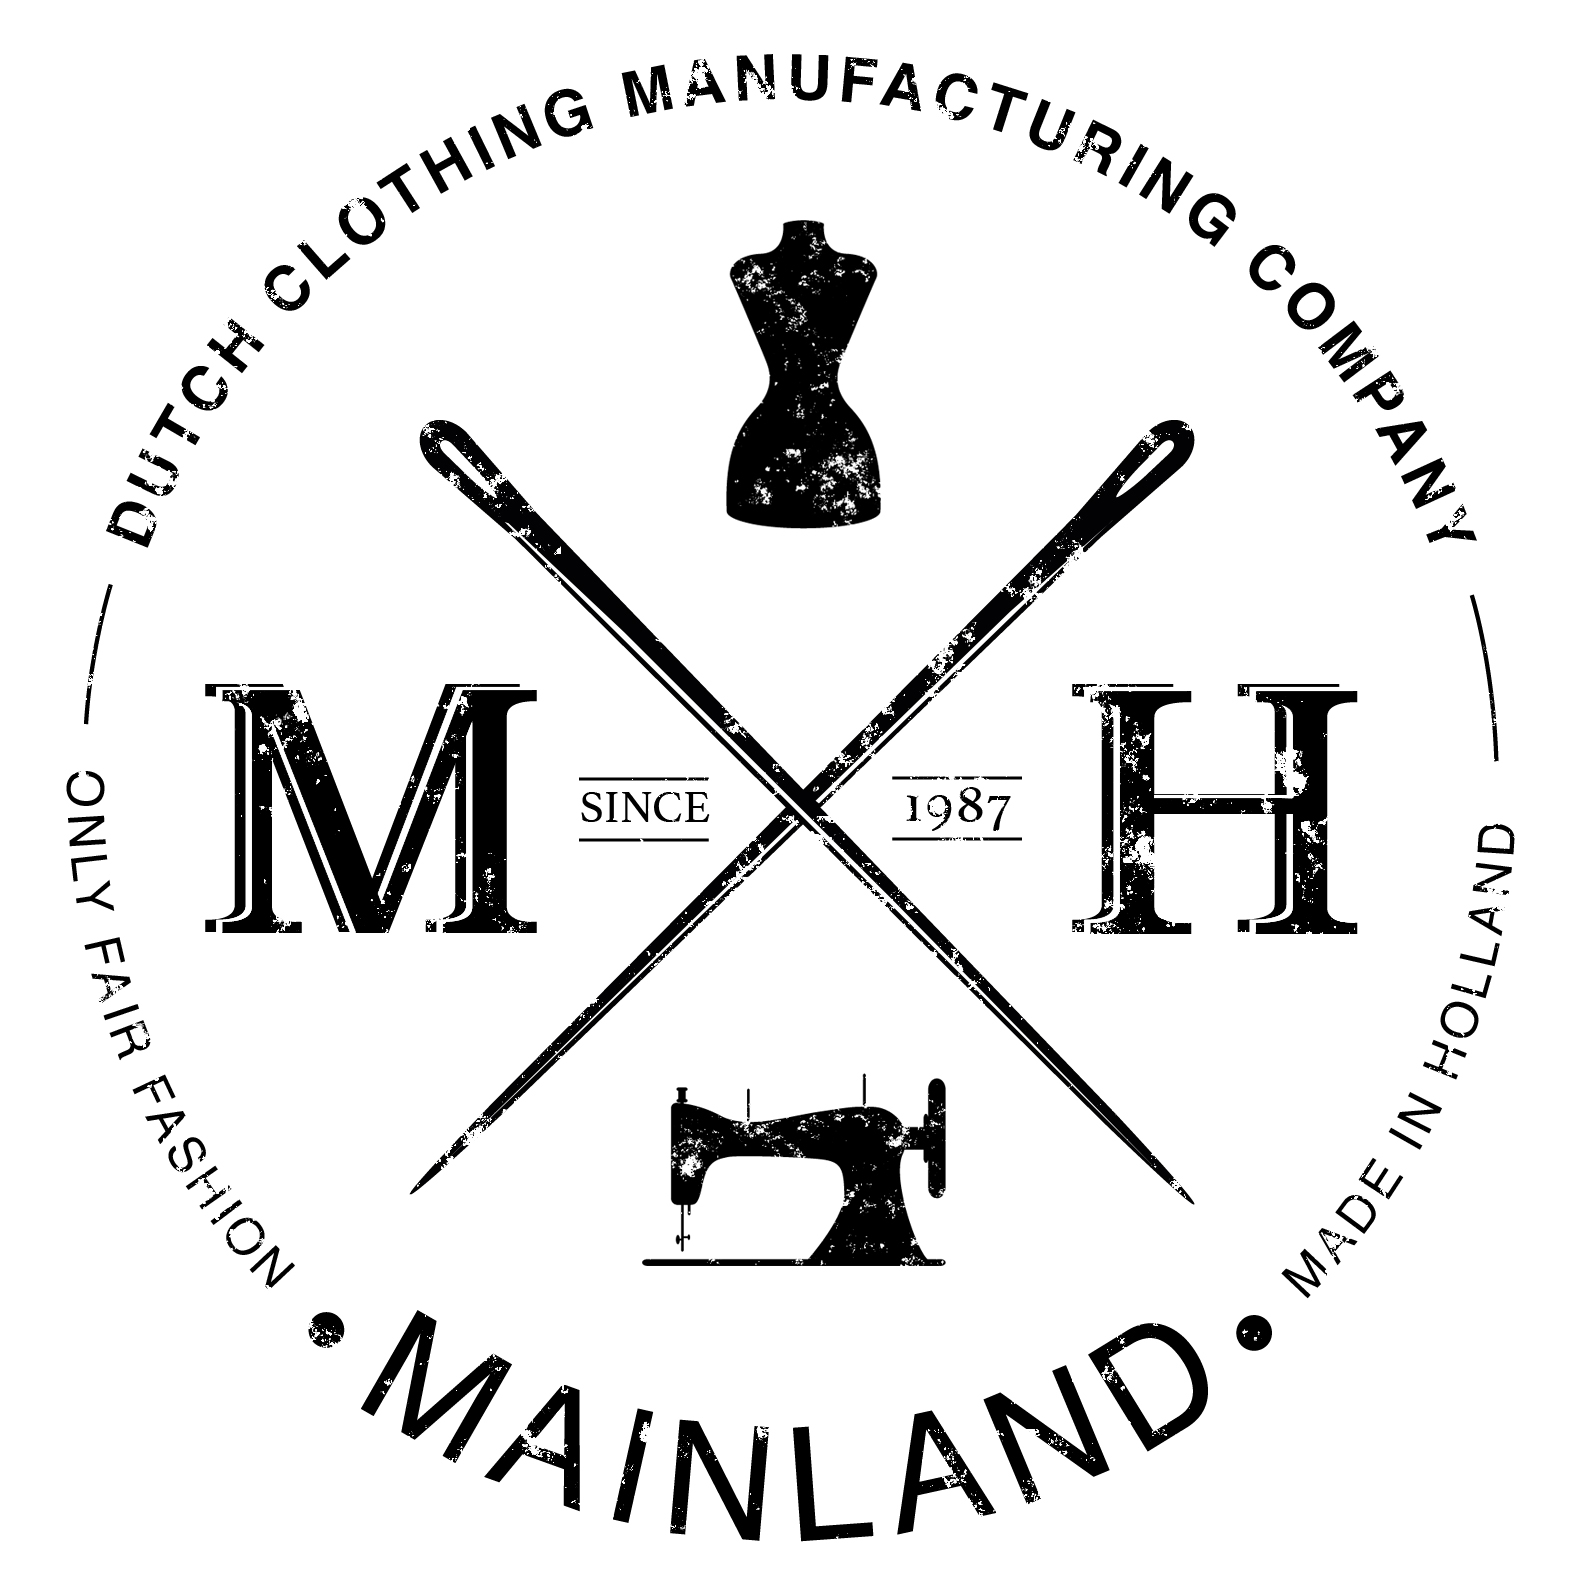 Organisations logo image for Mainland Kledingproductie NL